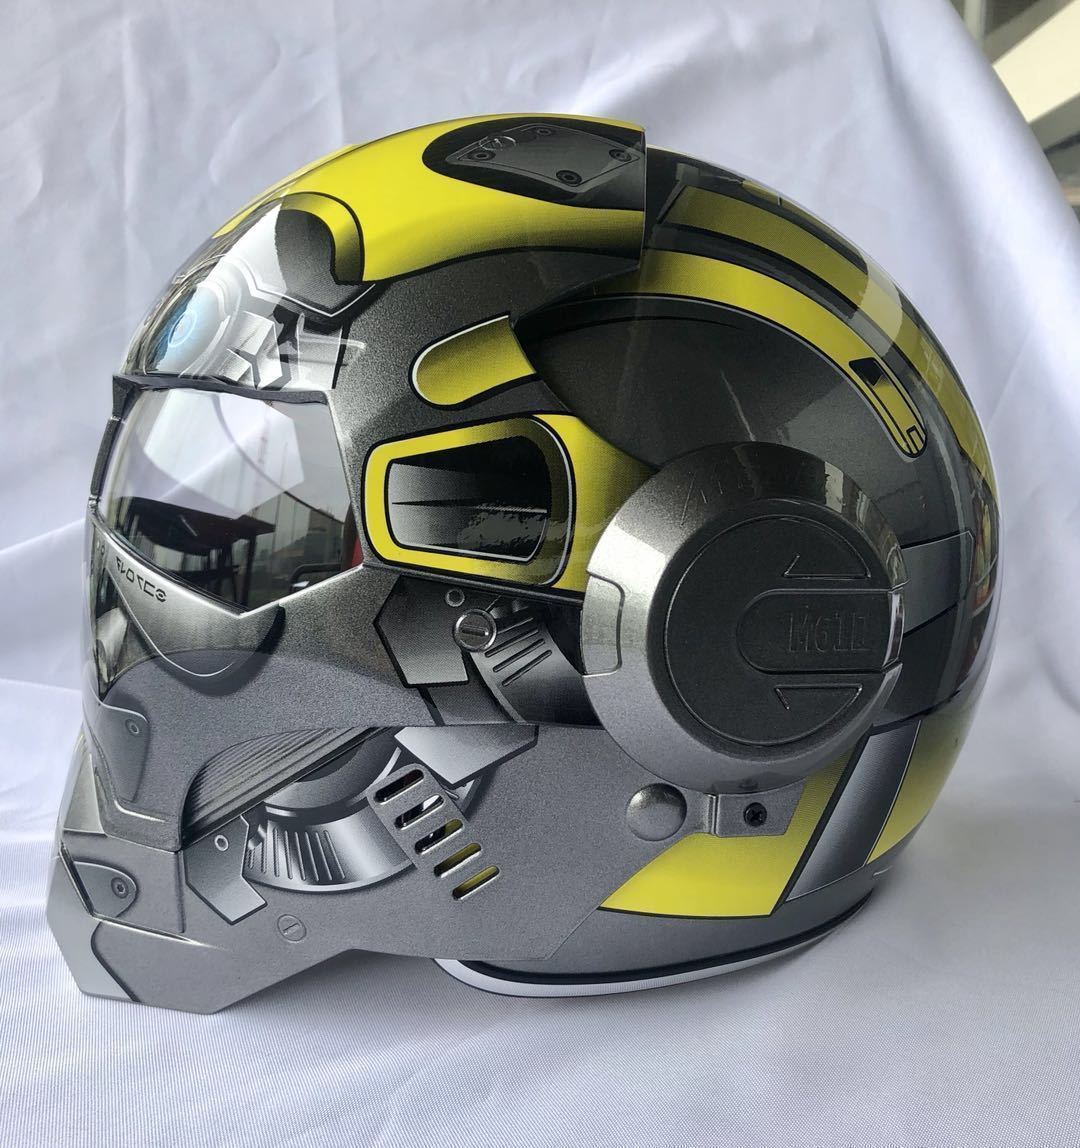 MASEI 610 TRANSFORMERS BUMBLEBEE MOTORCYCLE HARLEY OPEN FACE ARAI SHOEI HELMET - Helmets